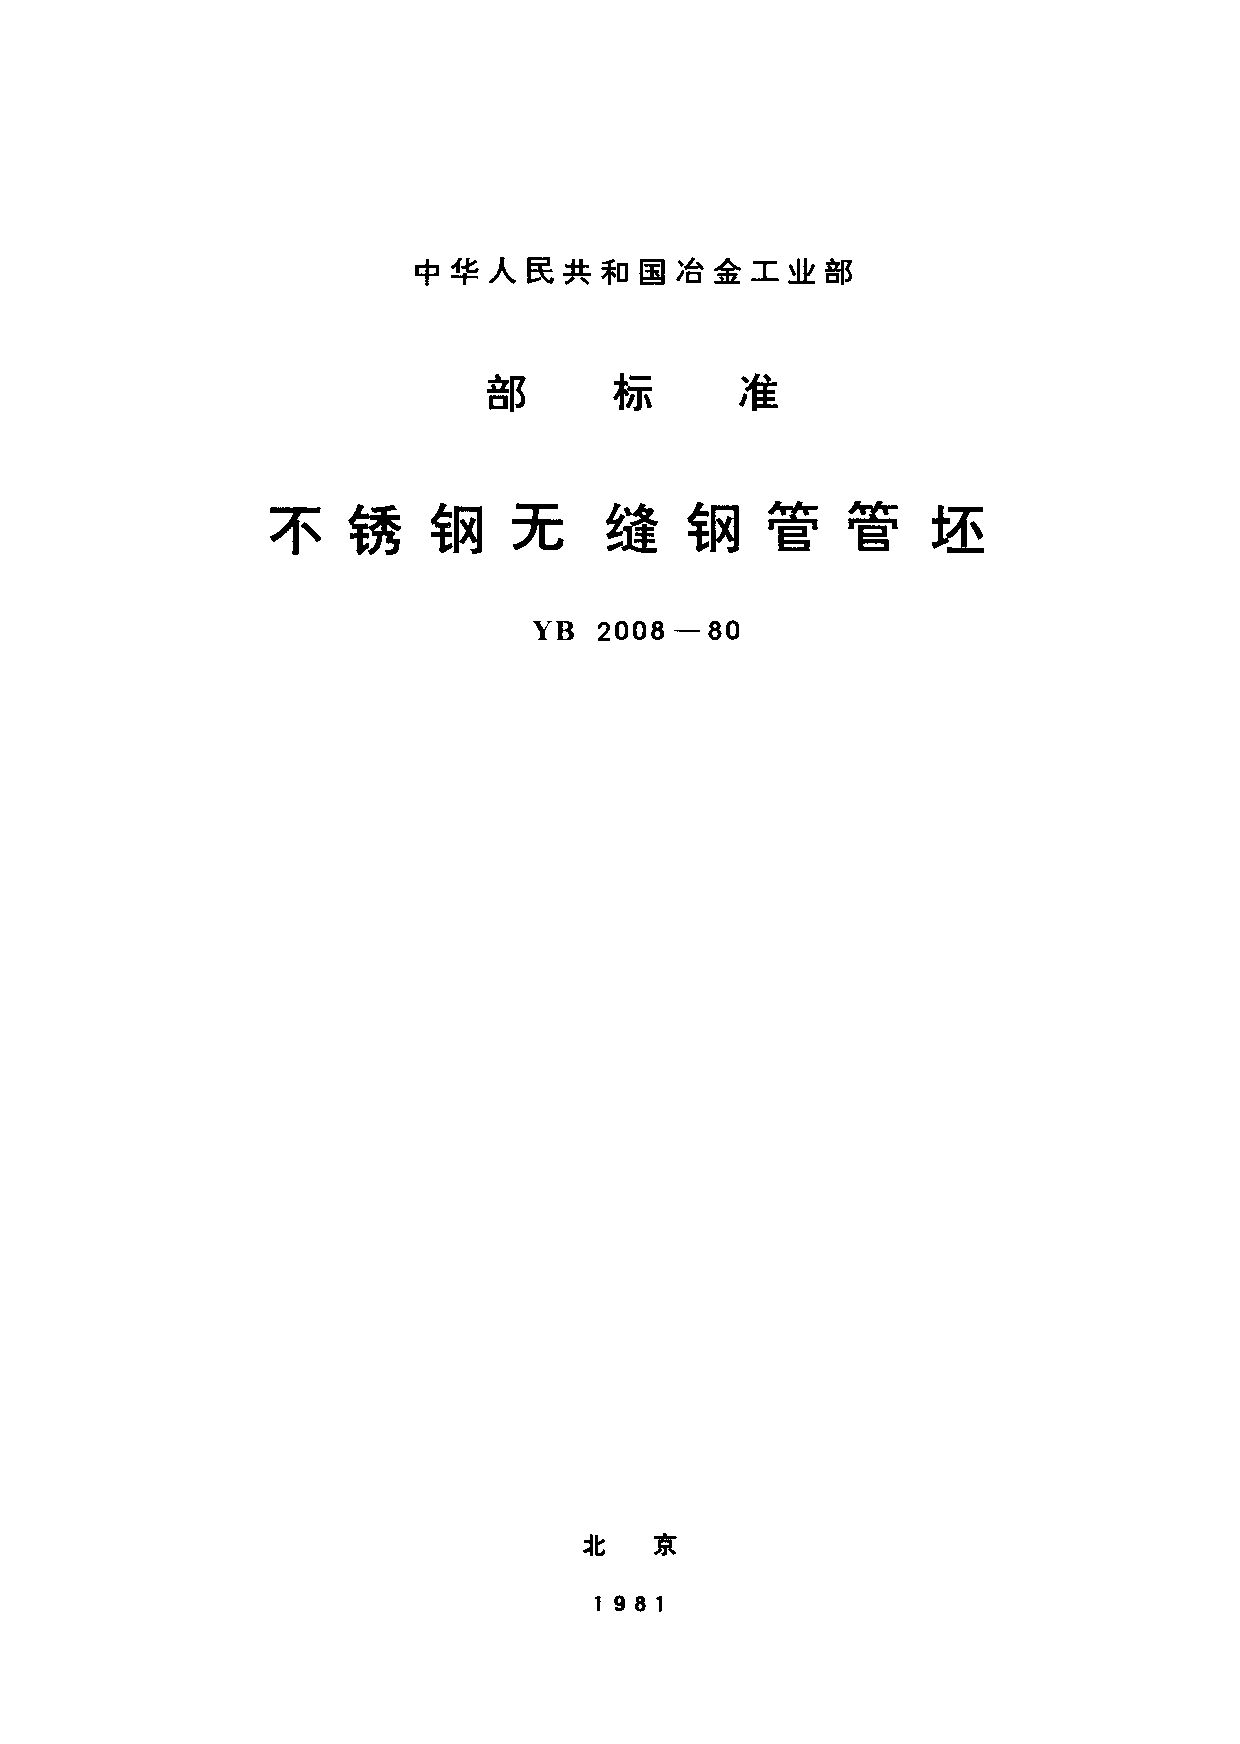 YB 2008-1980封面图